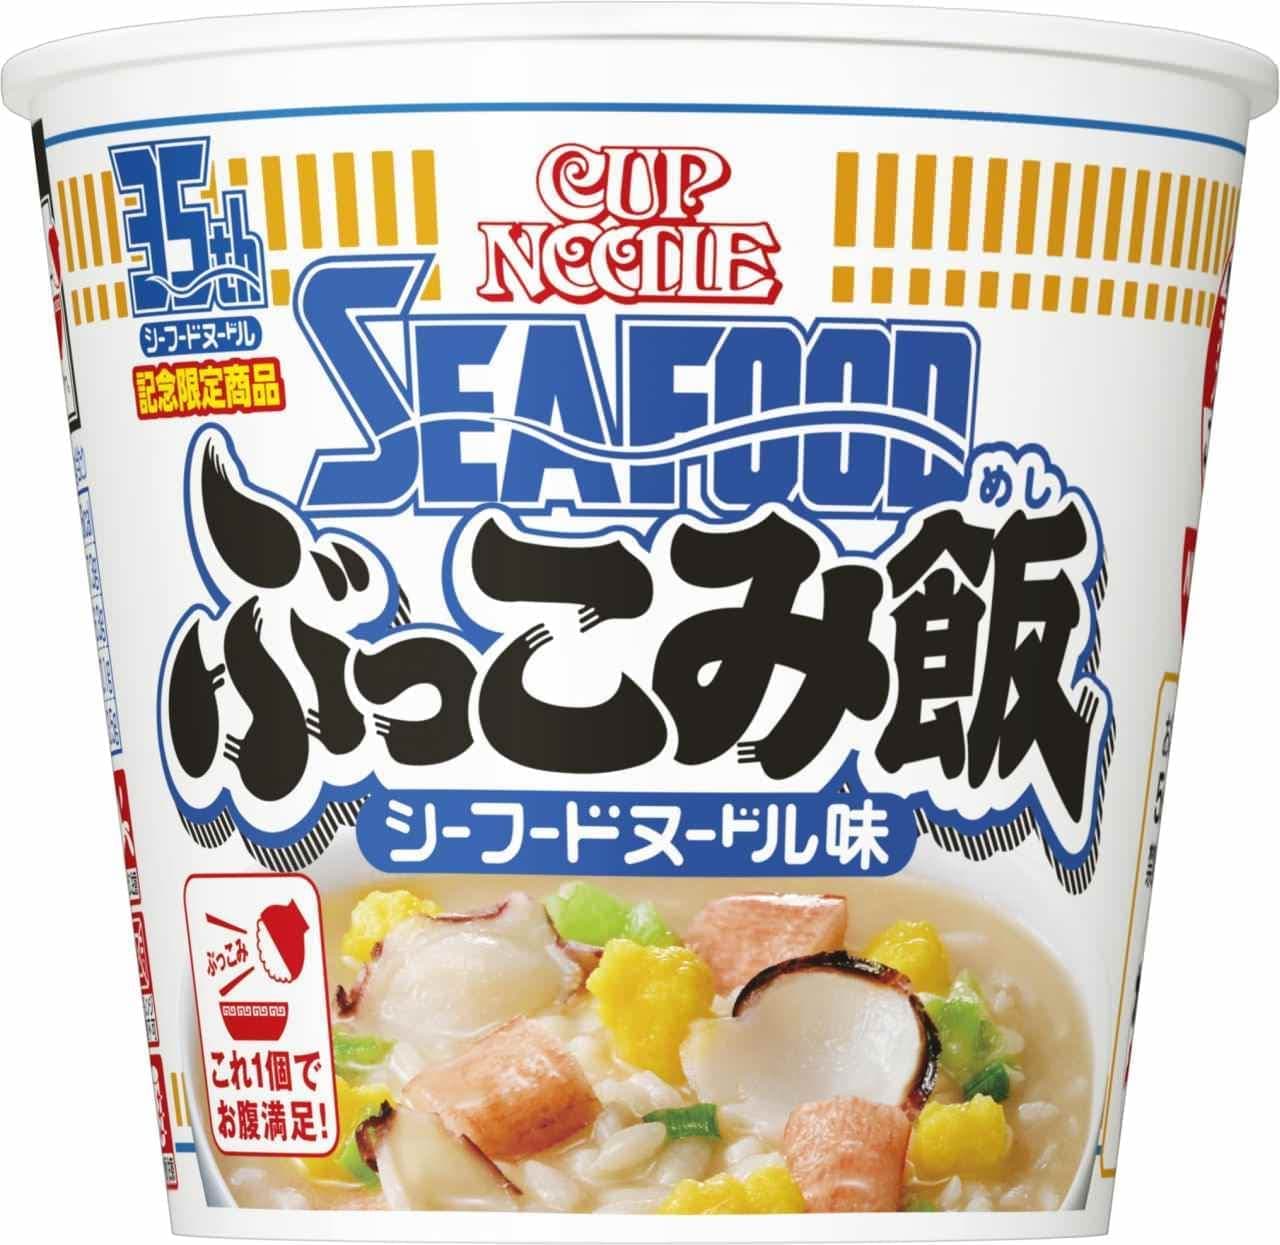 Nissin Foods "Cup Noodle Seafood Noodle Bukkomi Rice"